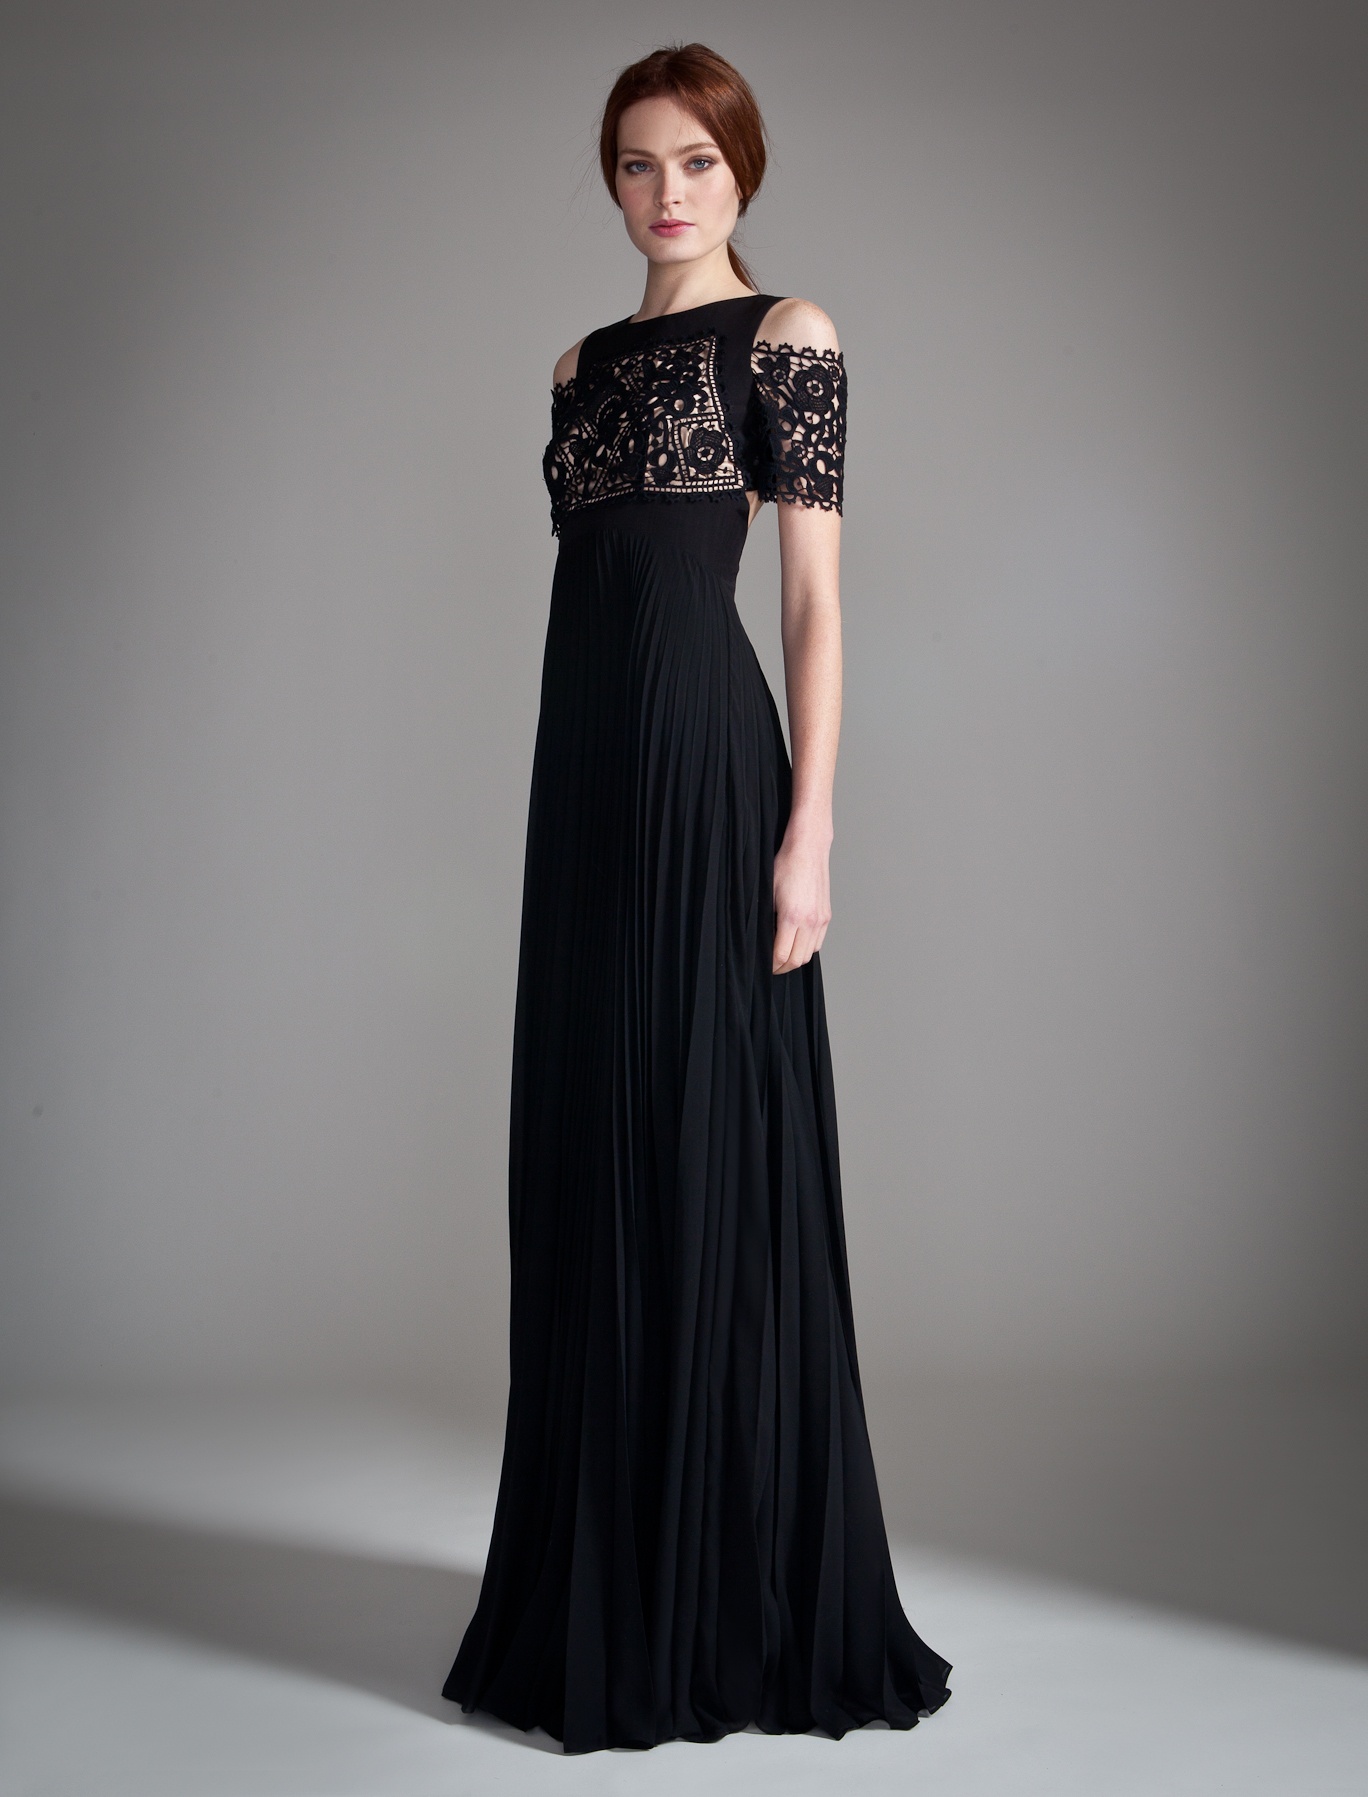 Lyst - Temperley london Long Catherine Dress in Black